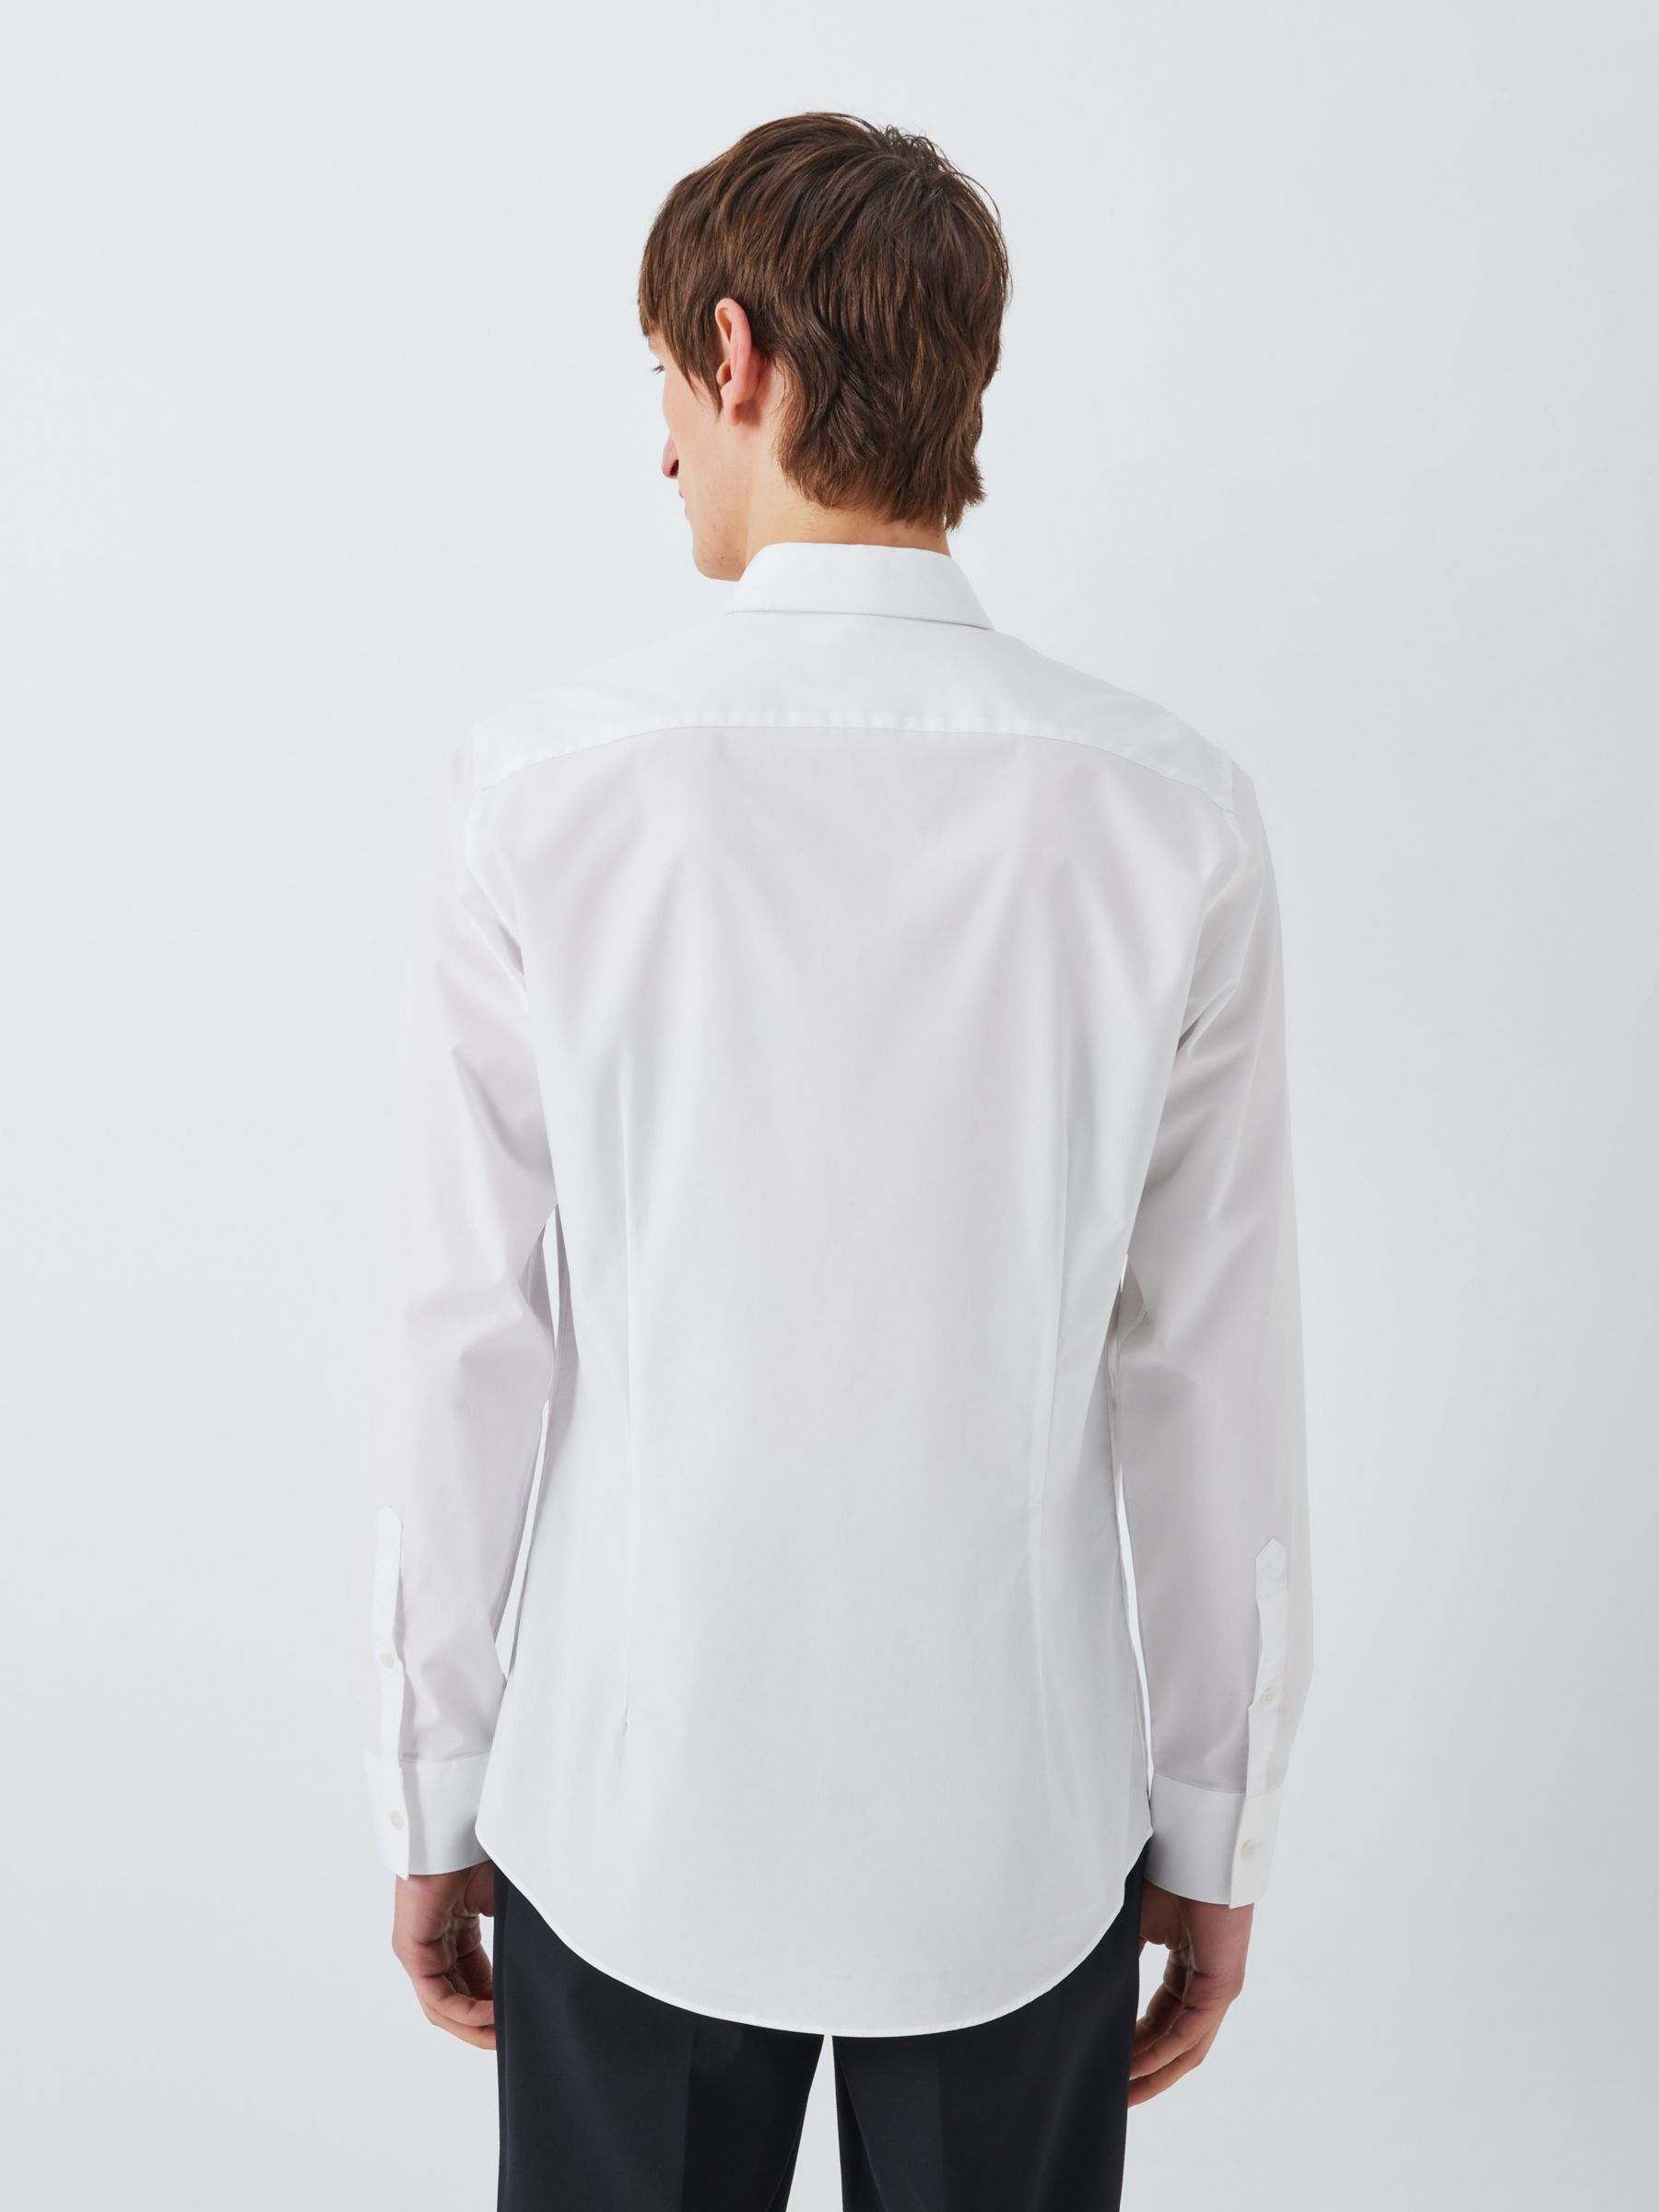 Kin Stretch Poplin Slim Fit Shirt, White at John Lewis & Partners